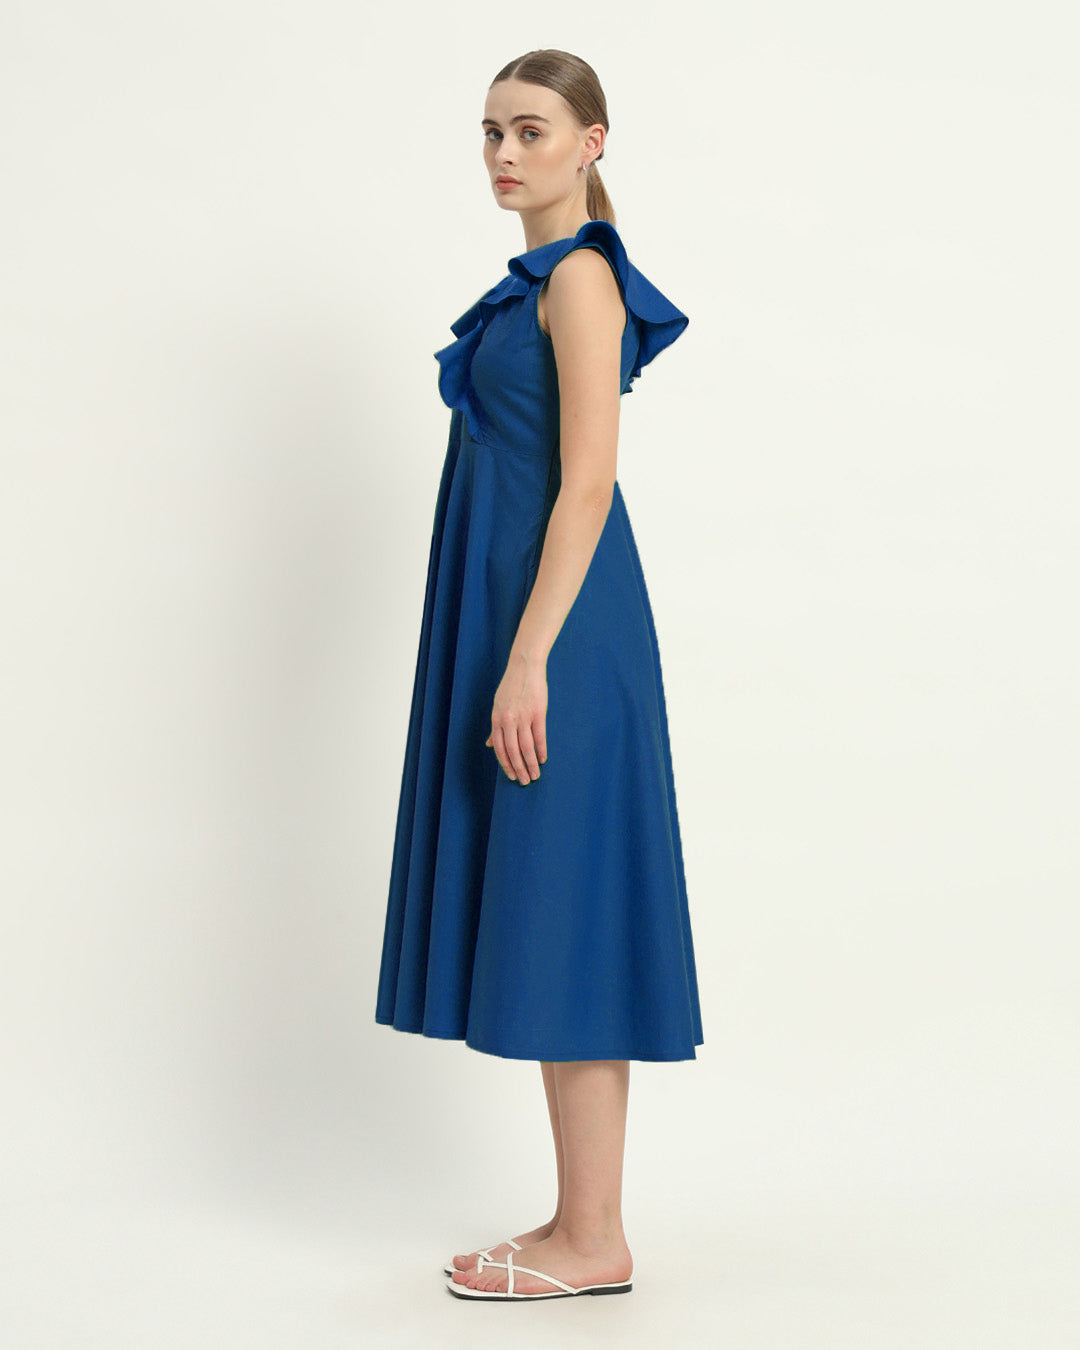 The Cobalt Albany Cotton Dress